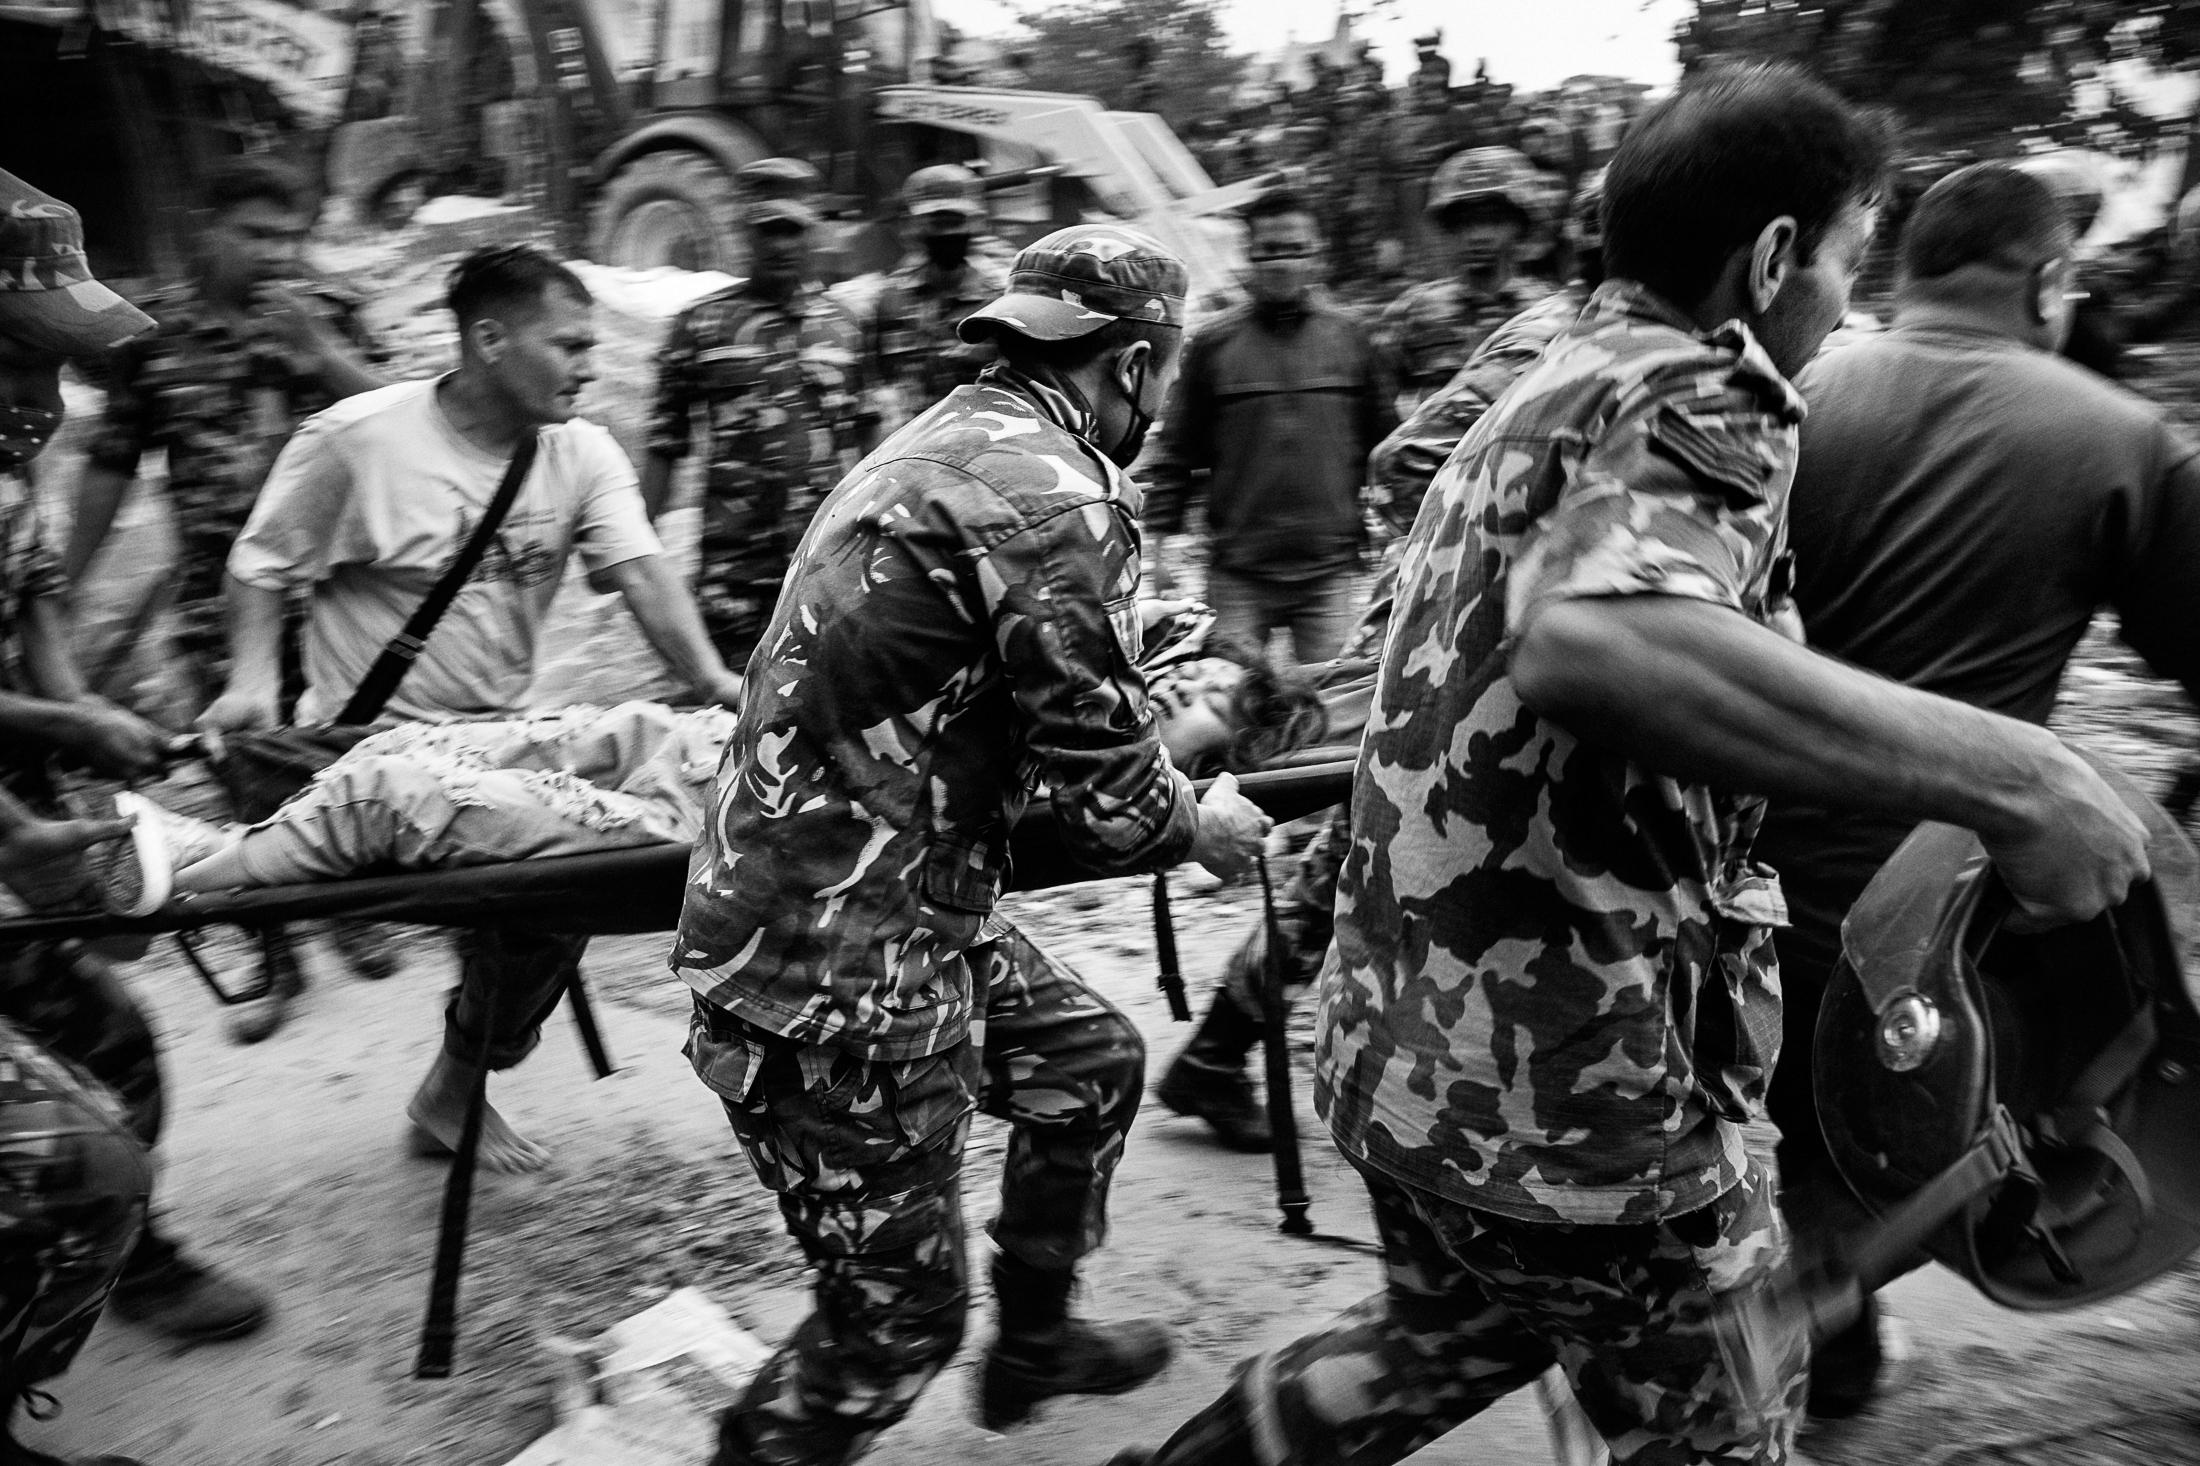 Endurance - KATHMANDU, NEPAL - APRIL 25: An injured woman is carried...